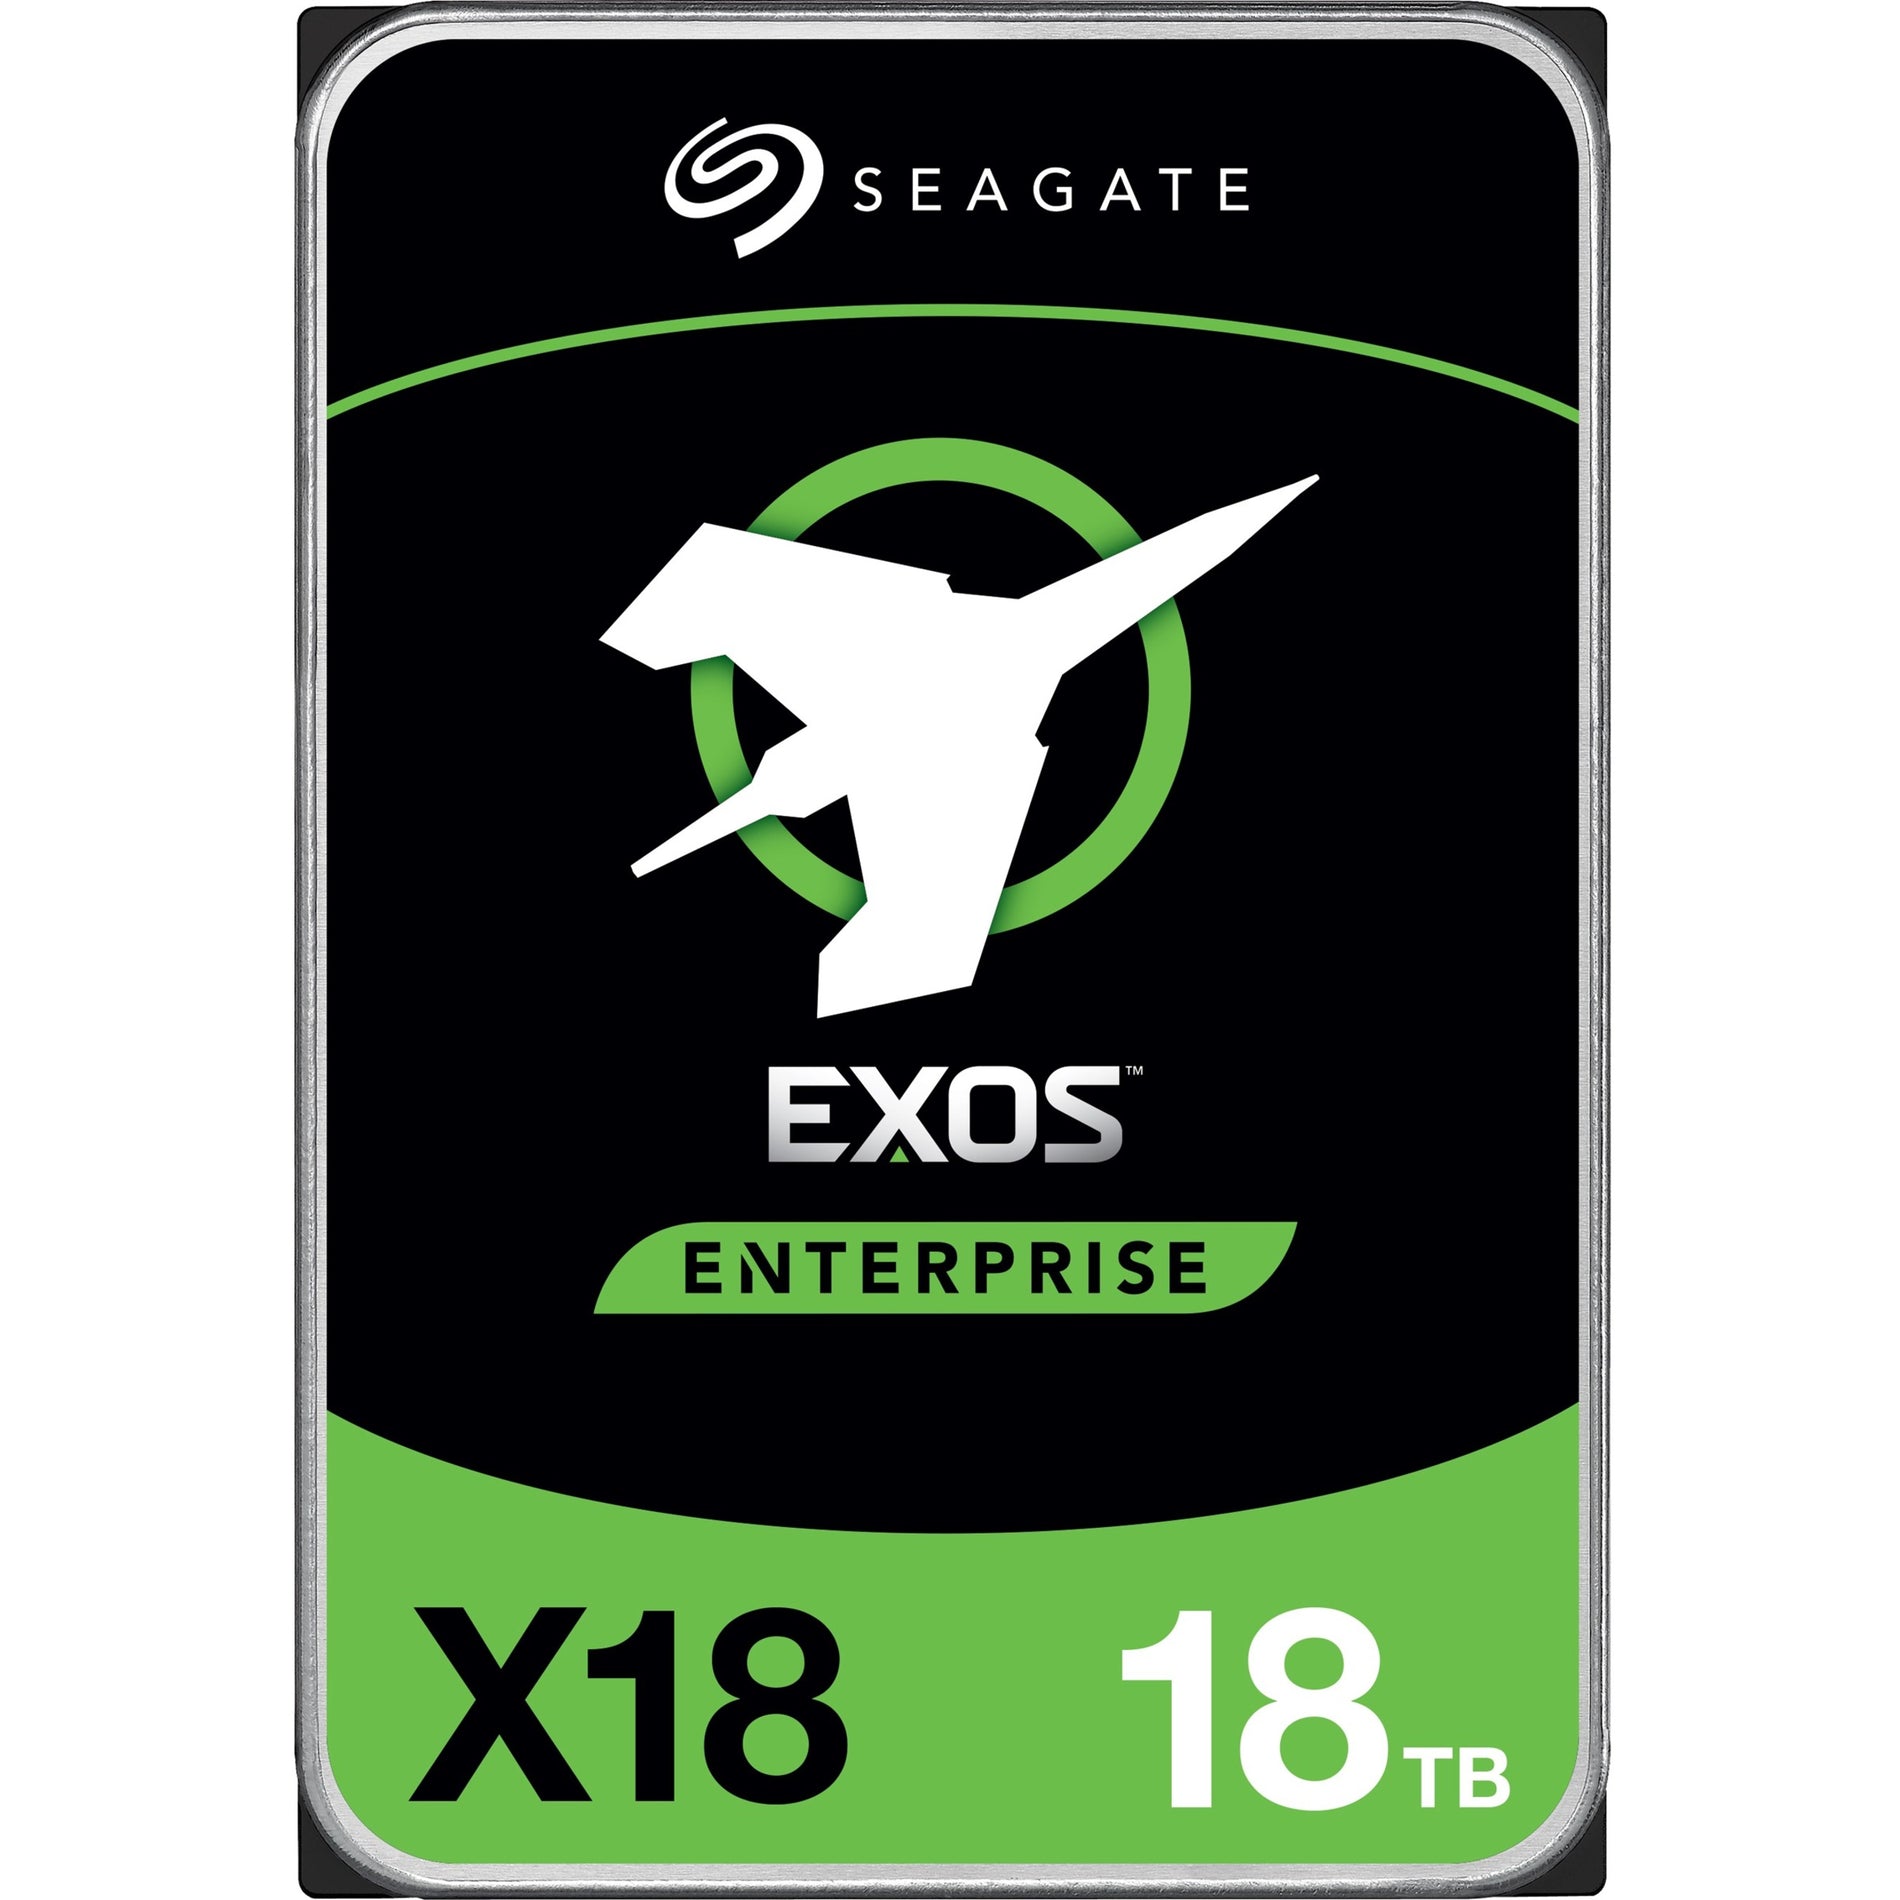 Seagate ST18000NM000J Exos X18 18TB SATA 3.5" Hard Drive, 7200RPM, 512e/4Kn, 5 Year Warranty